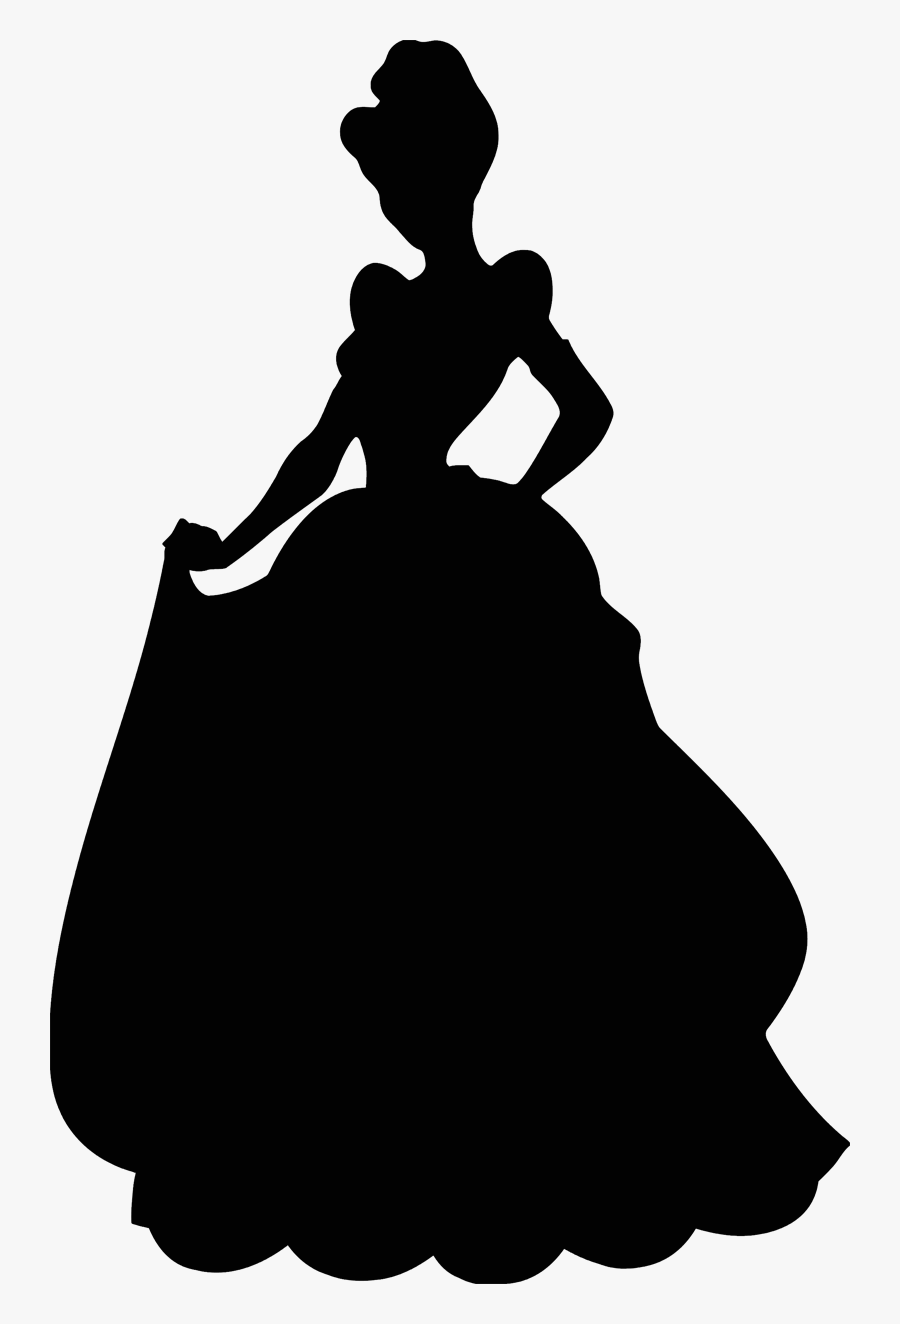 Cinderella Silhouette Disney Princess - Cinderella Silhouette Clipart, Transparent Clipart